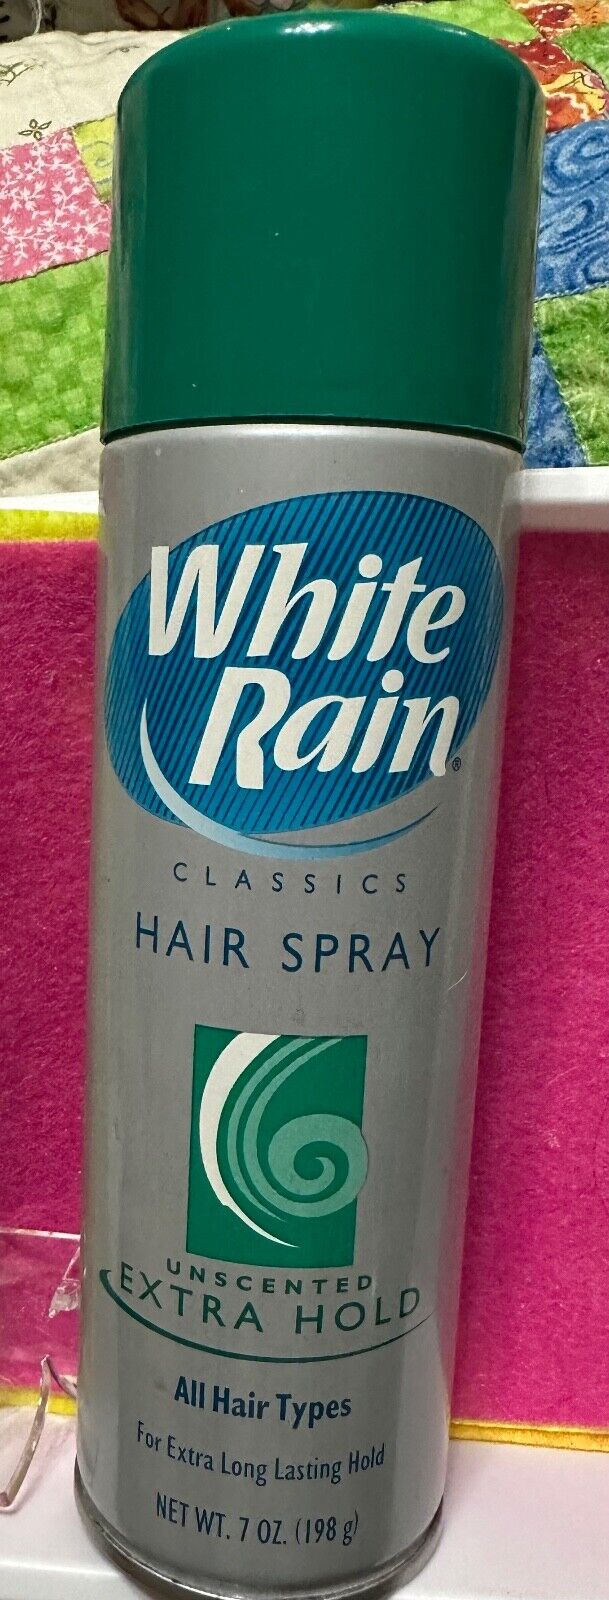 RARE vintage WHITE RAIN hairspray can HOUSEHOLD PRODUCT hair spray 2001 50% full